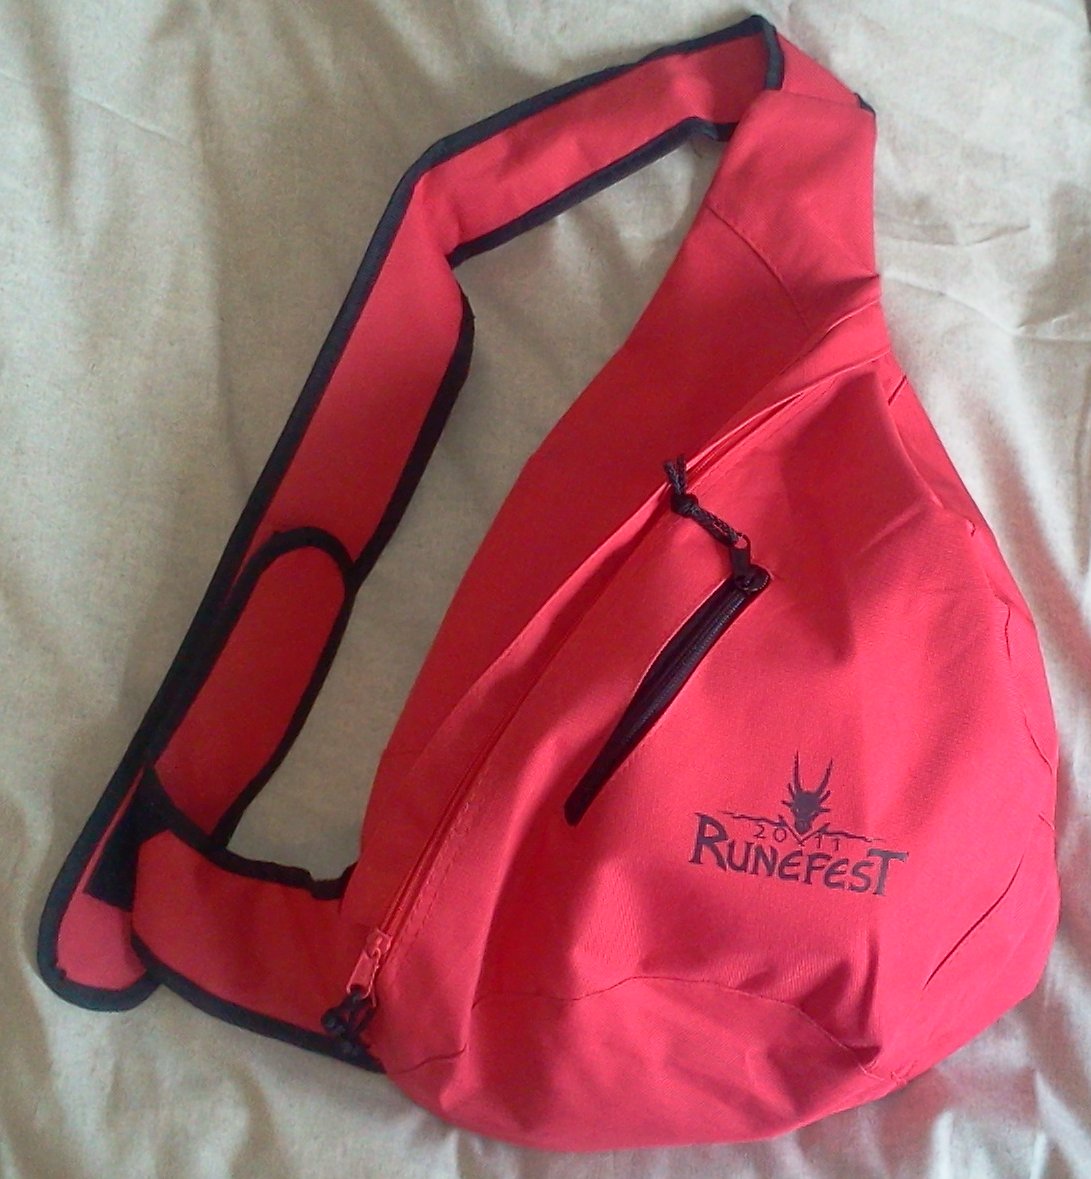 runescape bag